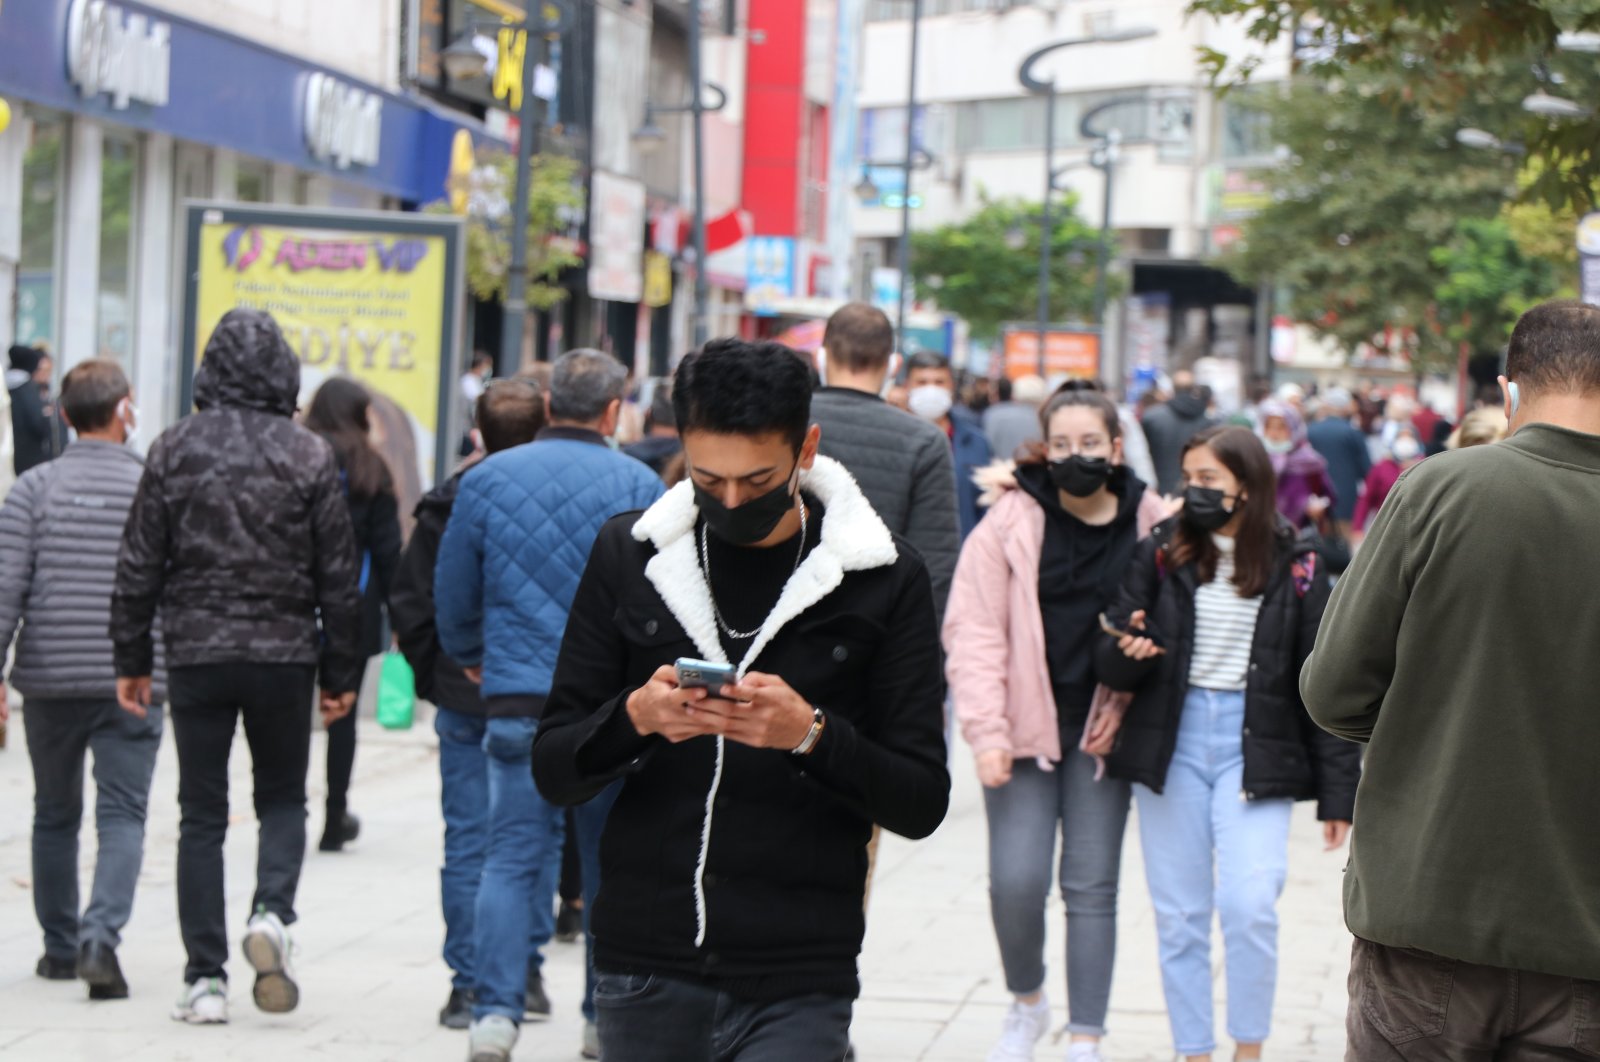 People wearing protective masks against COVID-19 walk on a street in Karabük, northern Turkey, Feb. 14, 2022. (IHA PHOTO)